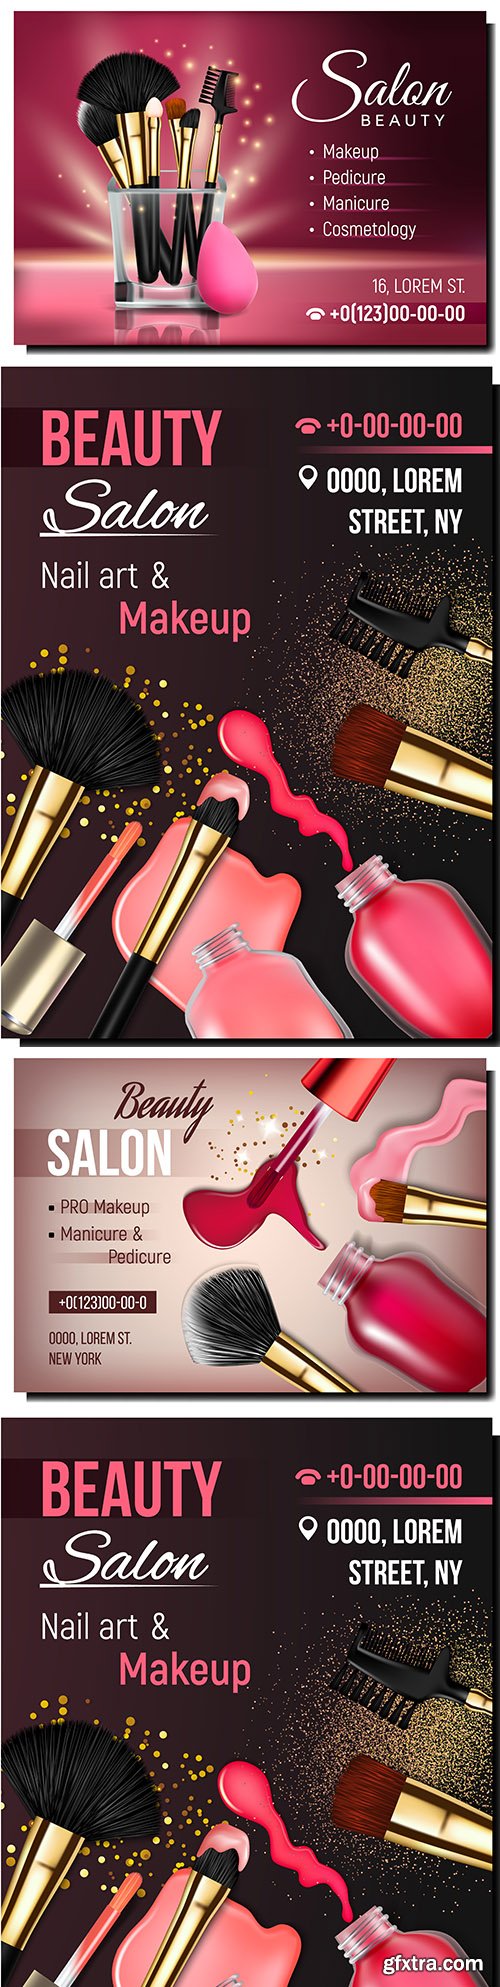 Beauty salon cosmetology advertising banner